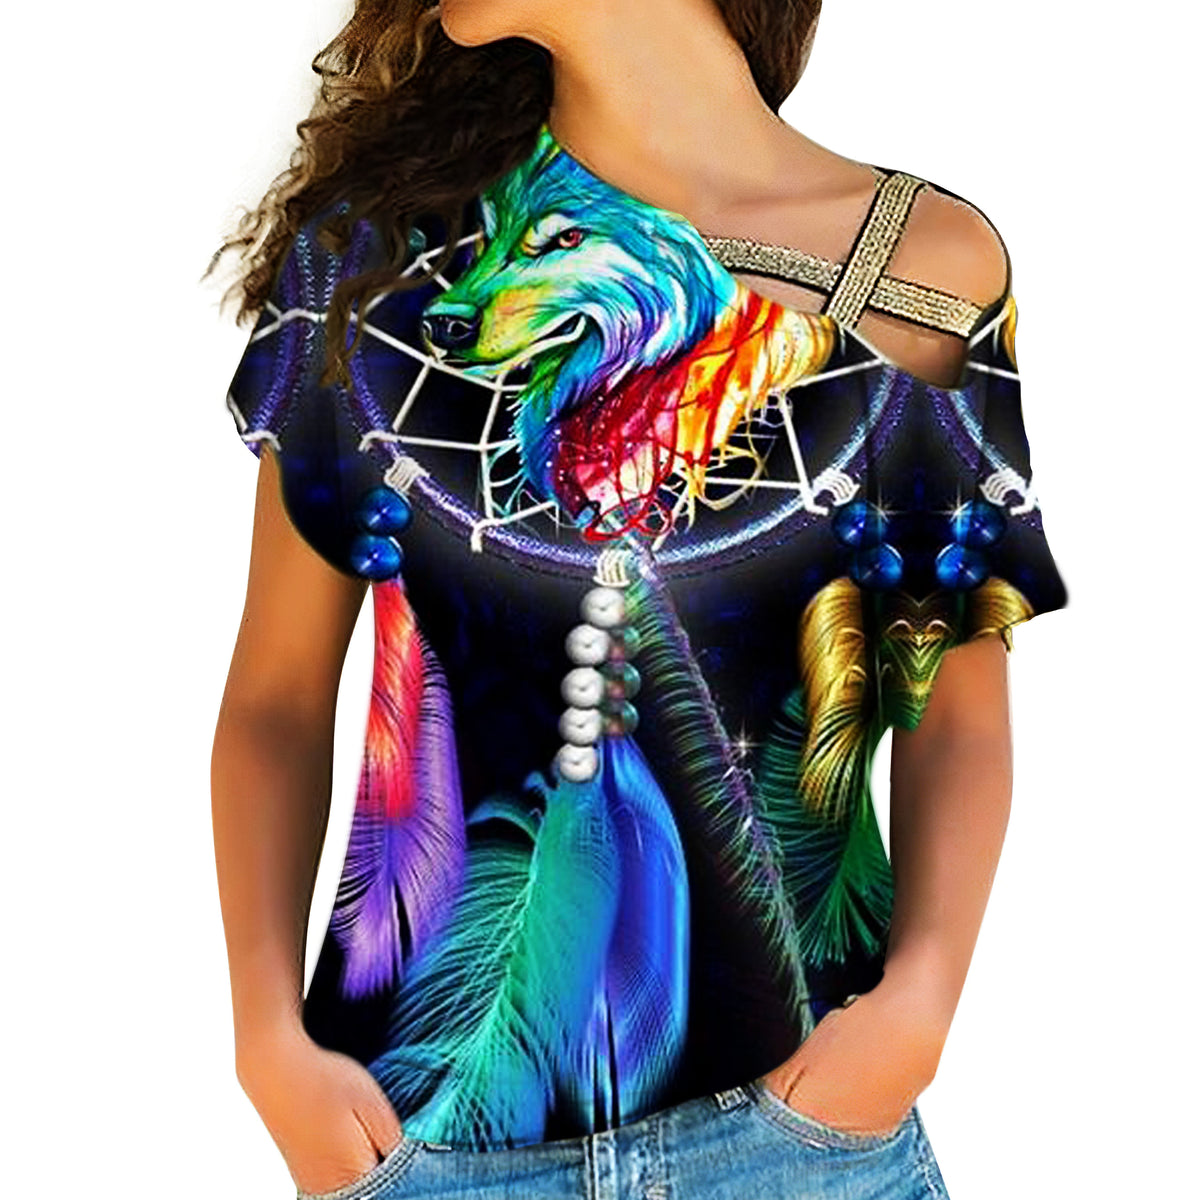 Powwow Store native american cross shoulder shirt 1191